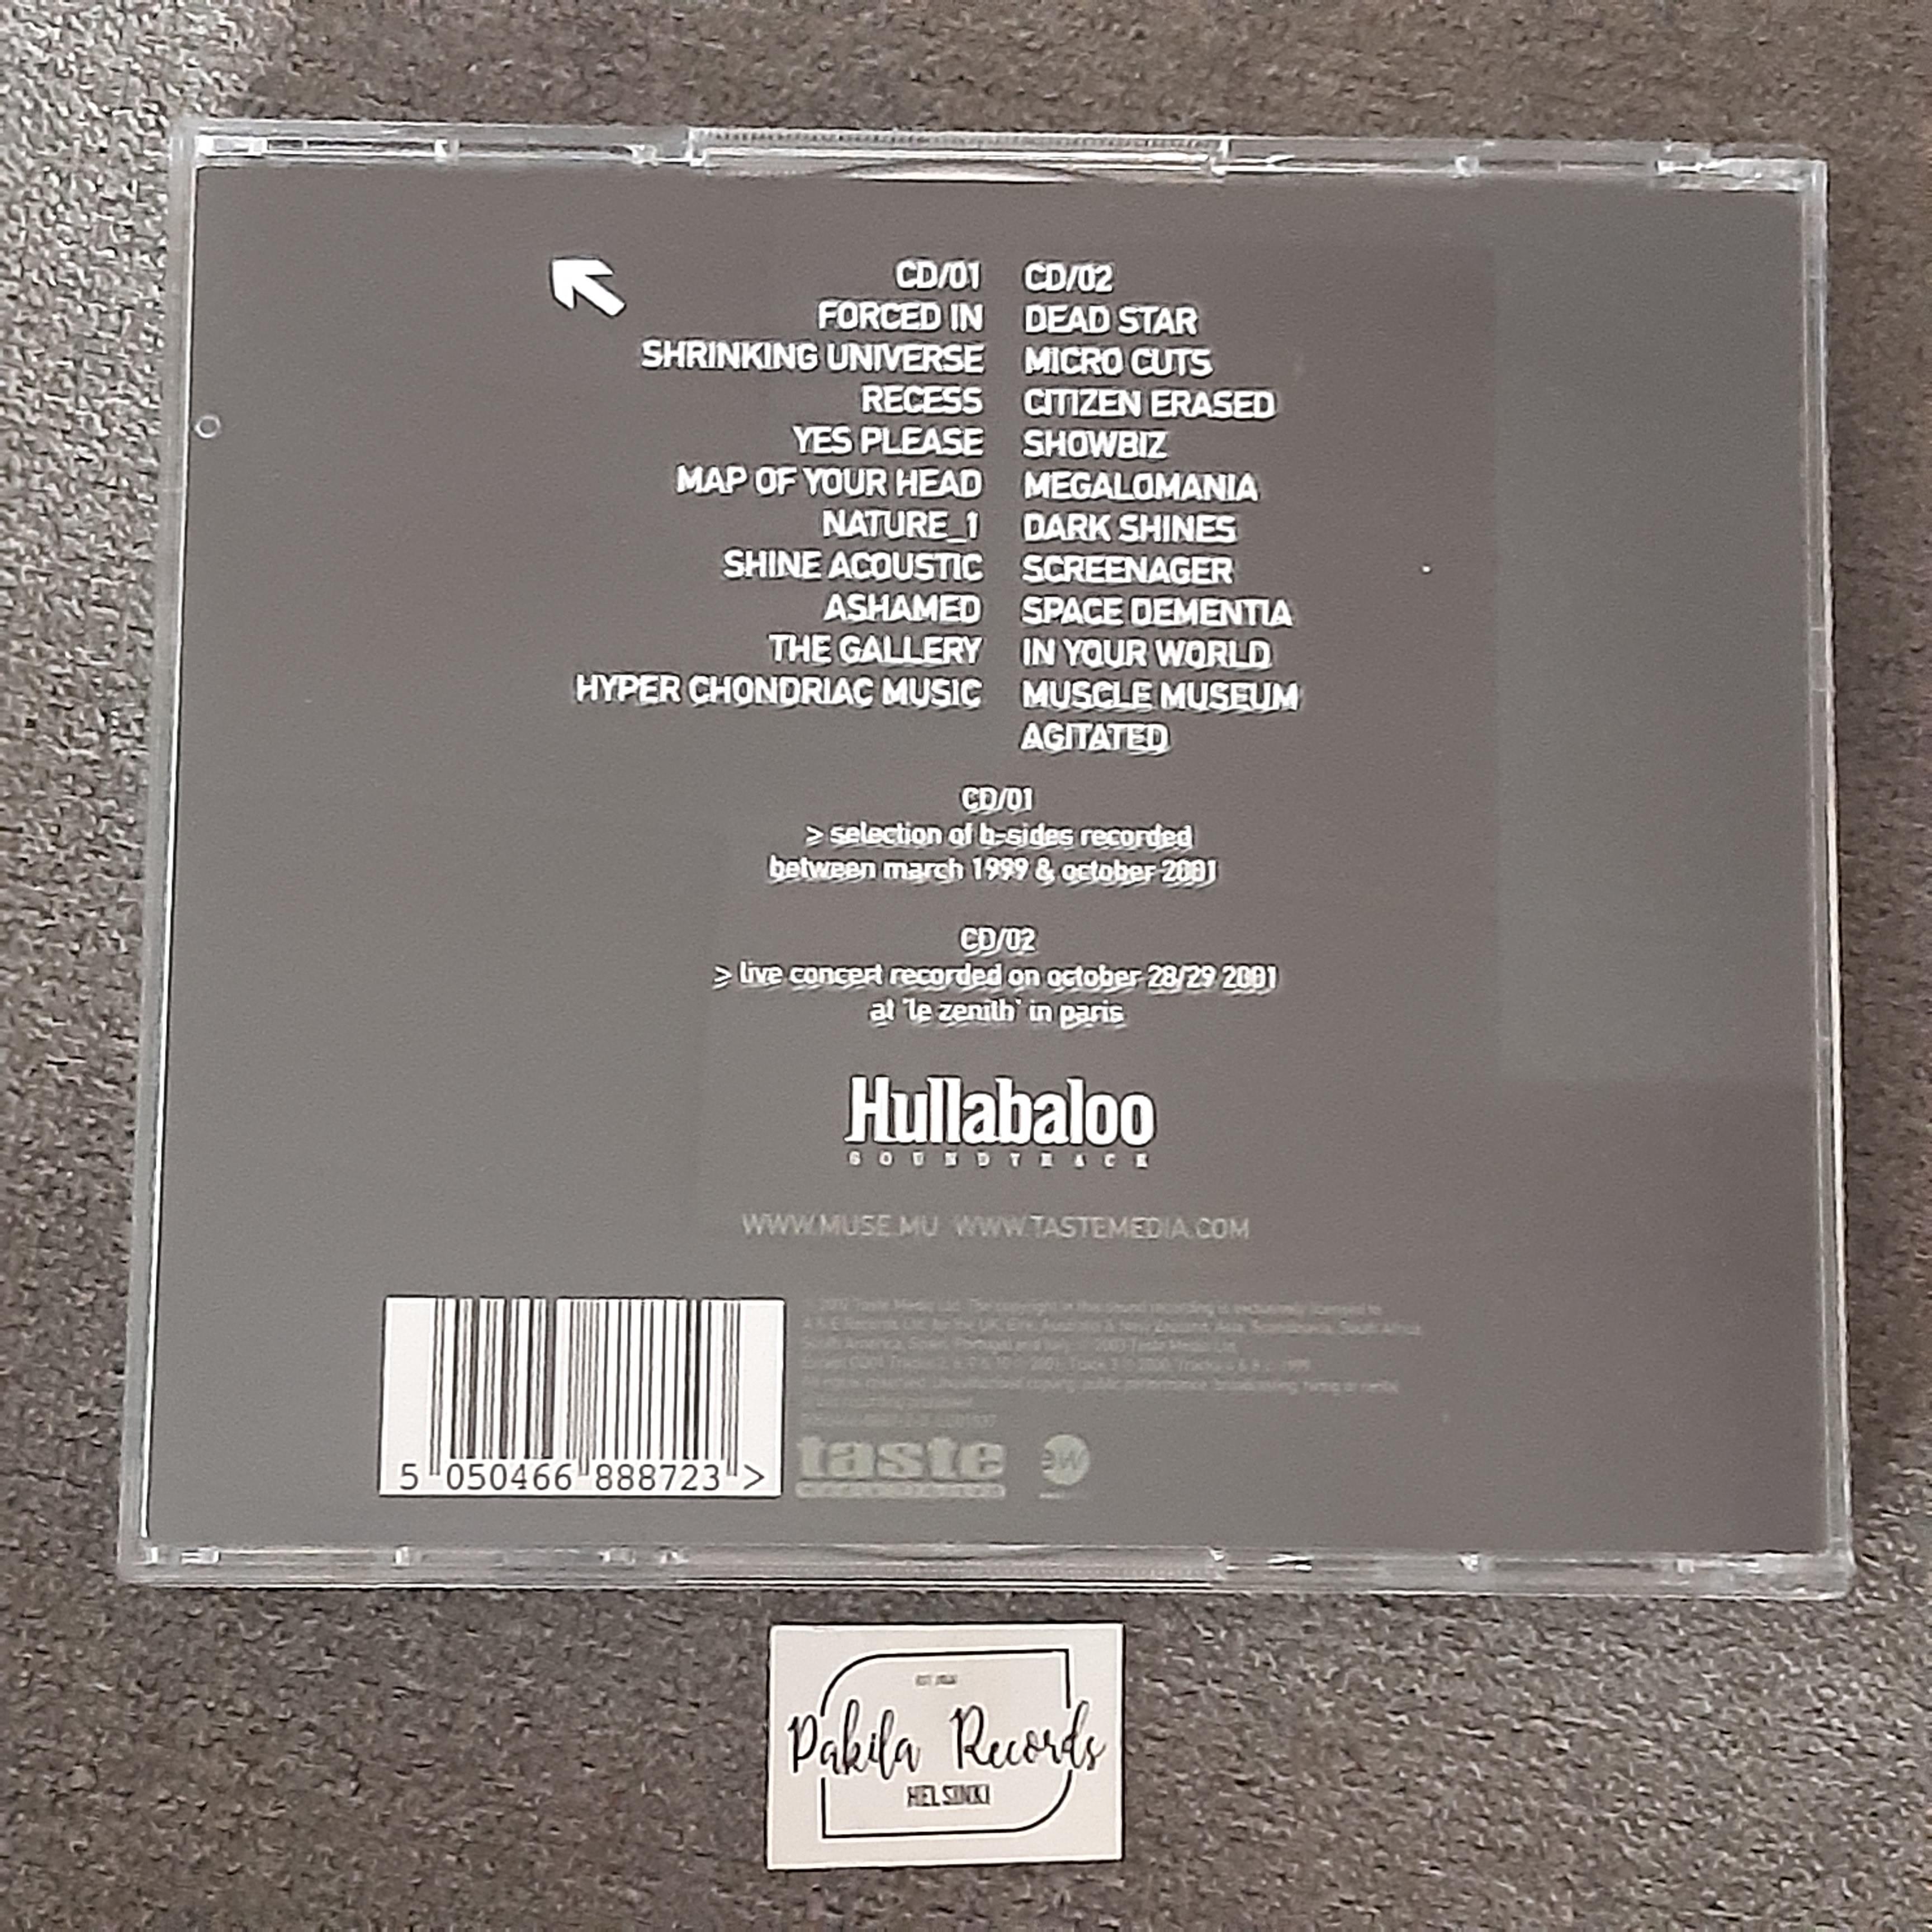 Muse - Hullabaloo - 2 CD (käytetty)